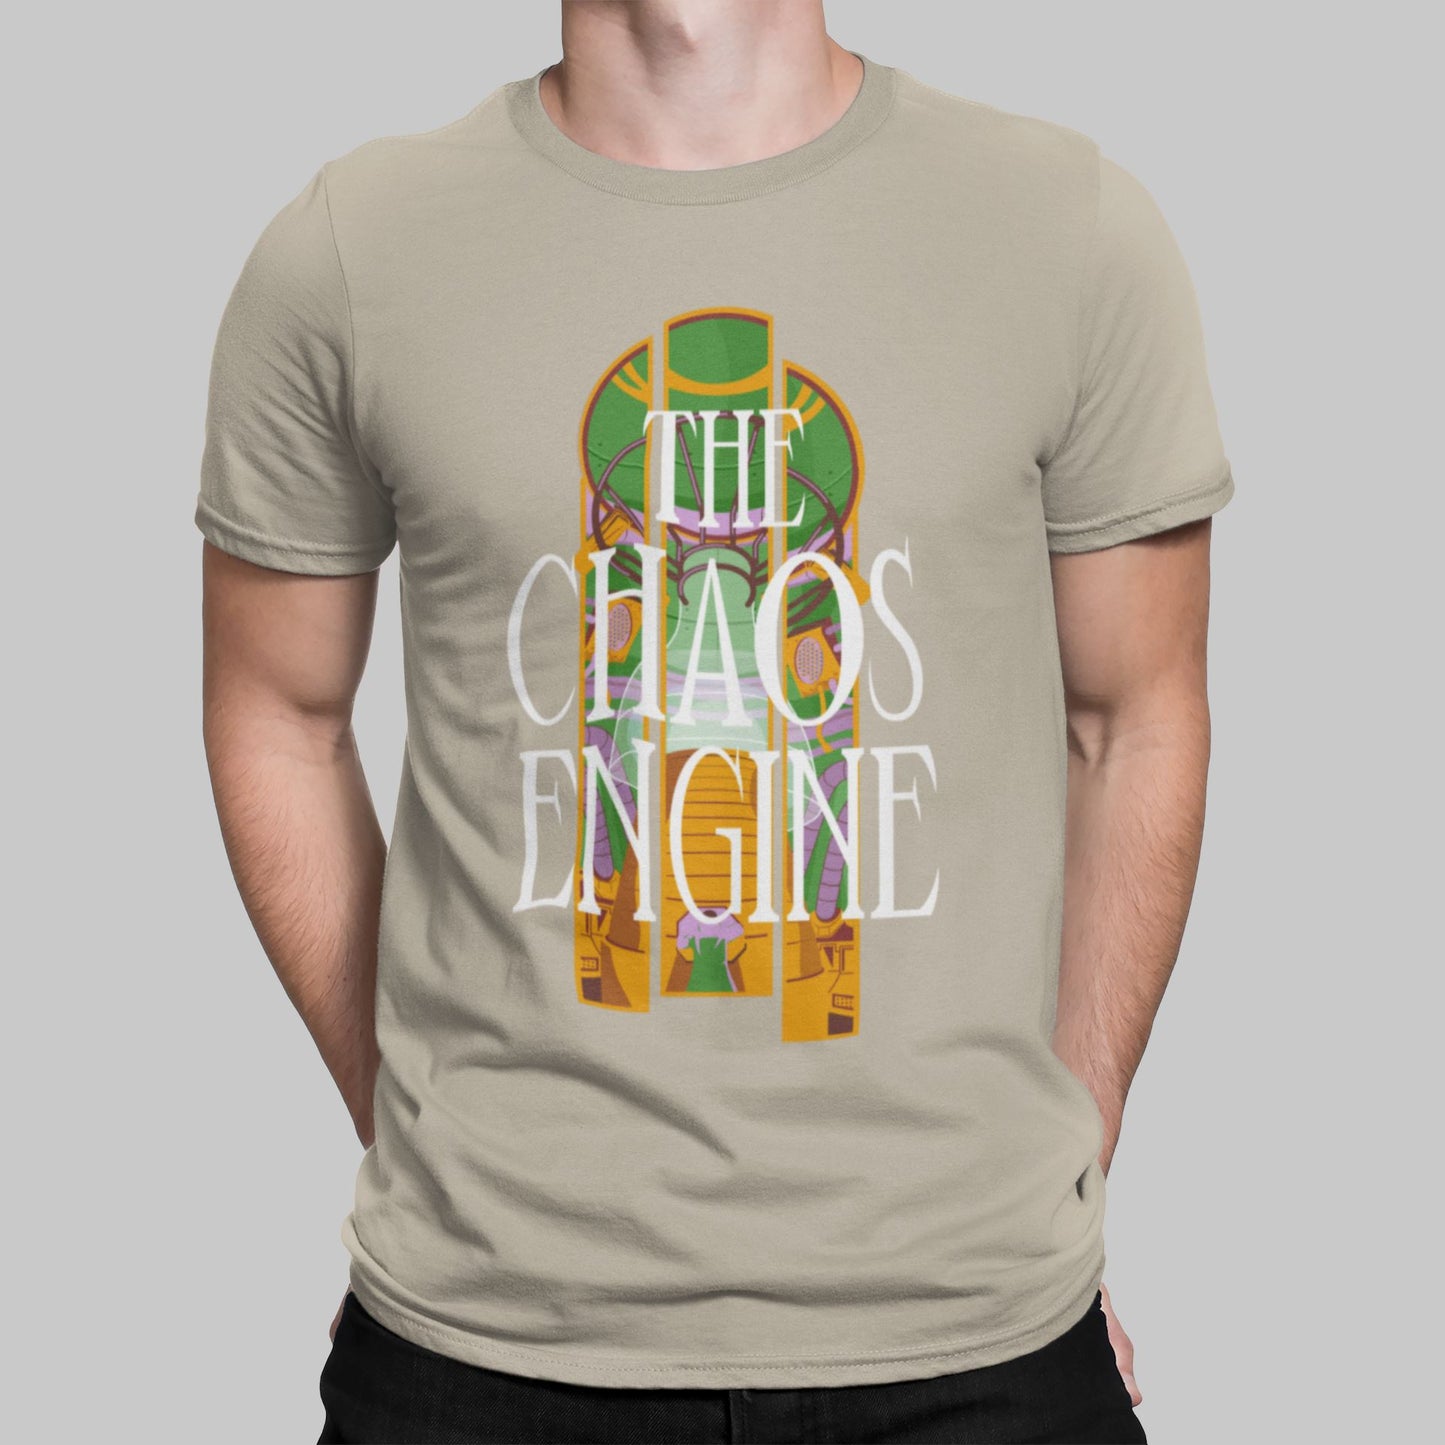 Chaos Engine Retro Gaming T-Shirt T-Shirt Seven Squared Small 34-36" Sand 